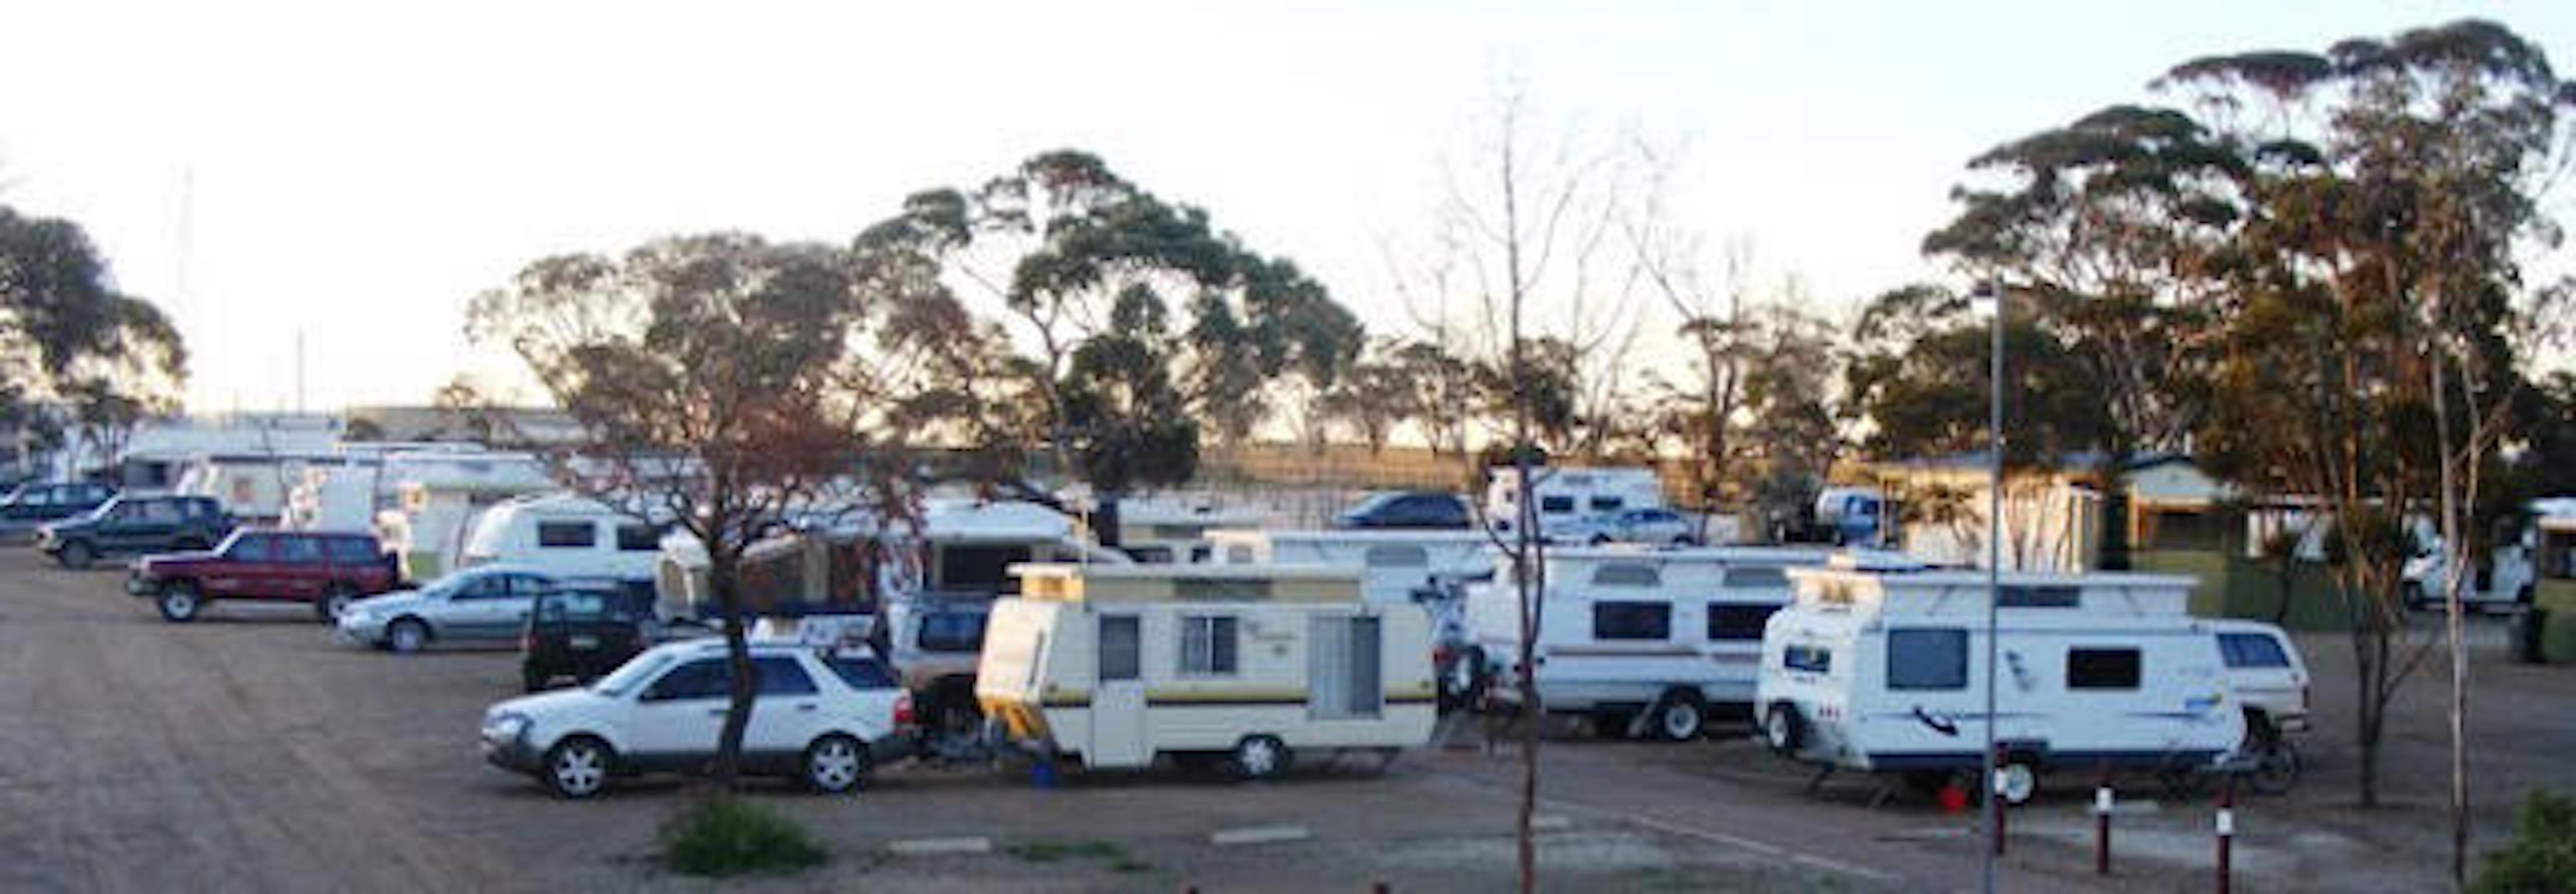 Woomera Traveller's Village and Caravan Park - Accommodation Kalgoorlie